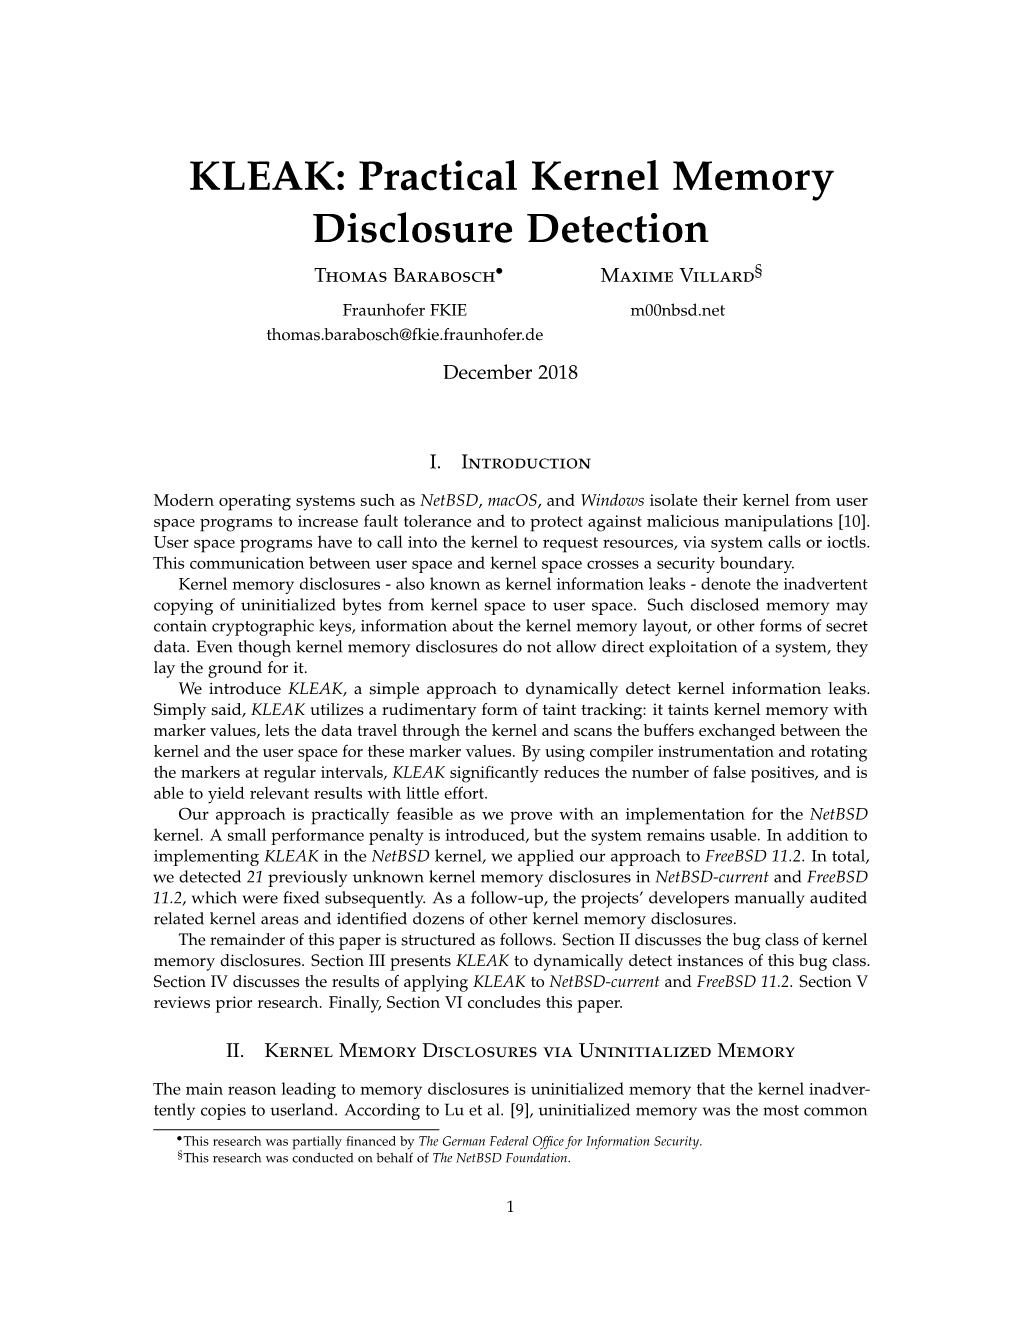 KLEAK: Practical Kernel Memory Disclosure Detection Thomas Barabosch• Maxime Villard§ Fraunhofer FKIE M00nbsd.Net Thomas.Barabosch@Fkie.Fraunhofer.De December 2018